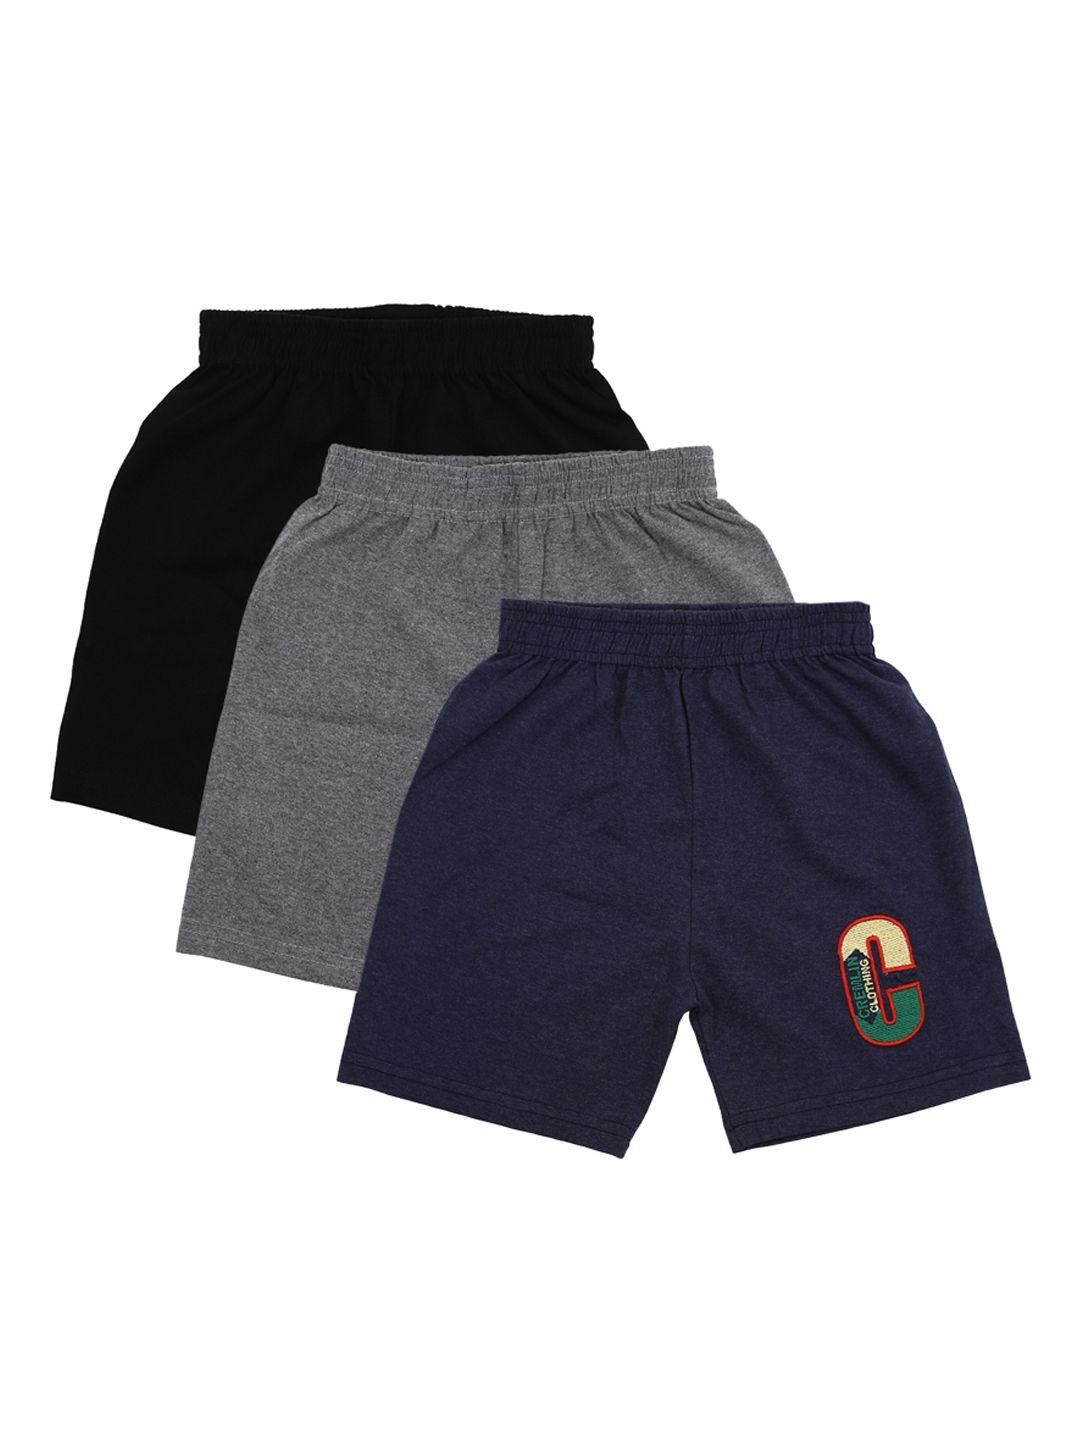 cremlin clothing unisex kids multicoloured pack of 3 shorts